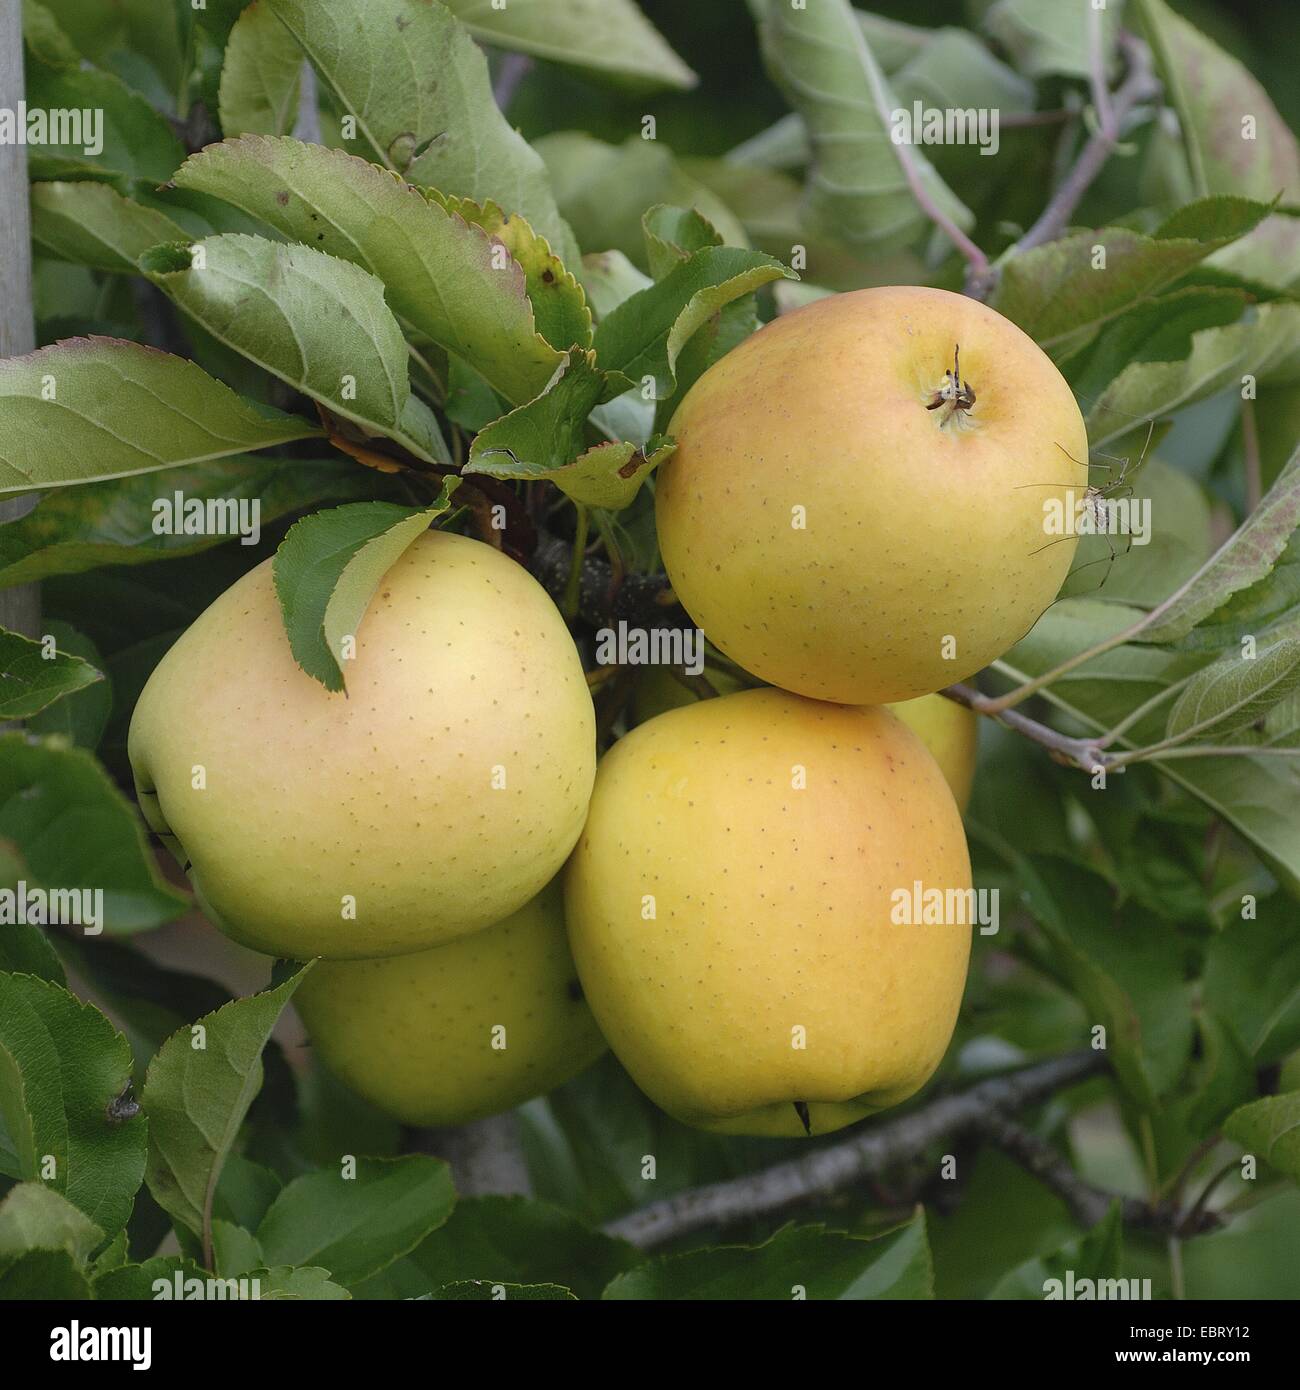 apple tree (Malus domestica 'Williams Pride', Malus domestica Williams Pride), cultivar Williams Pride, apples on a tree Stock Photo